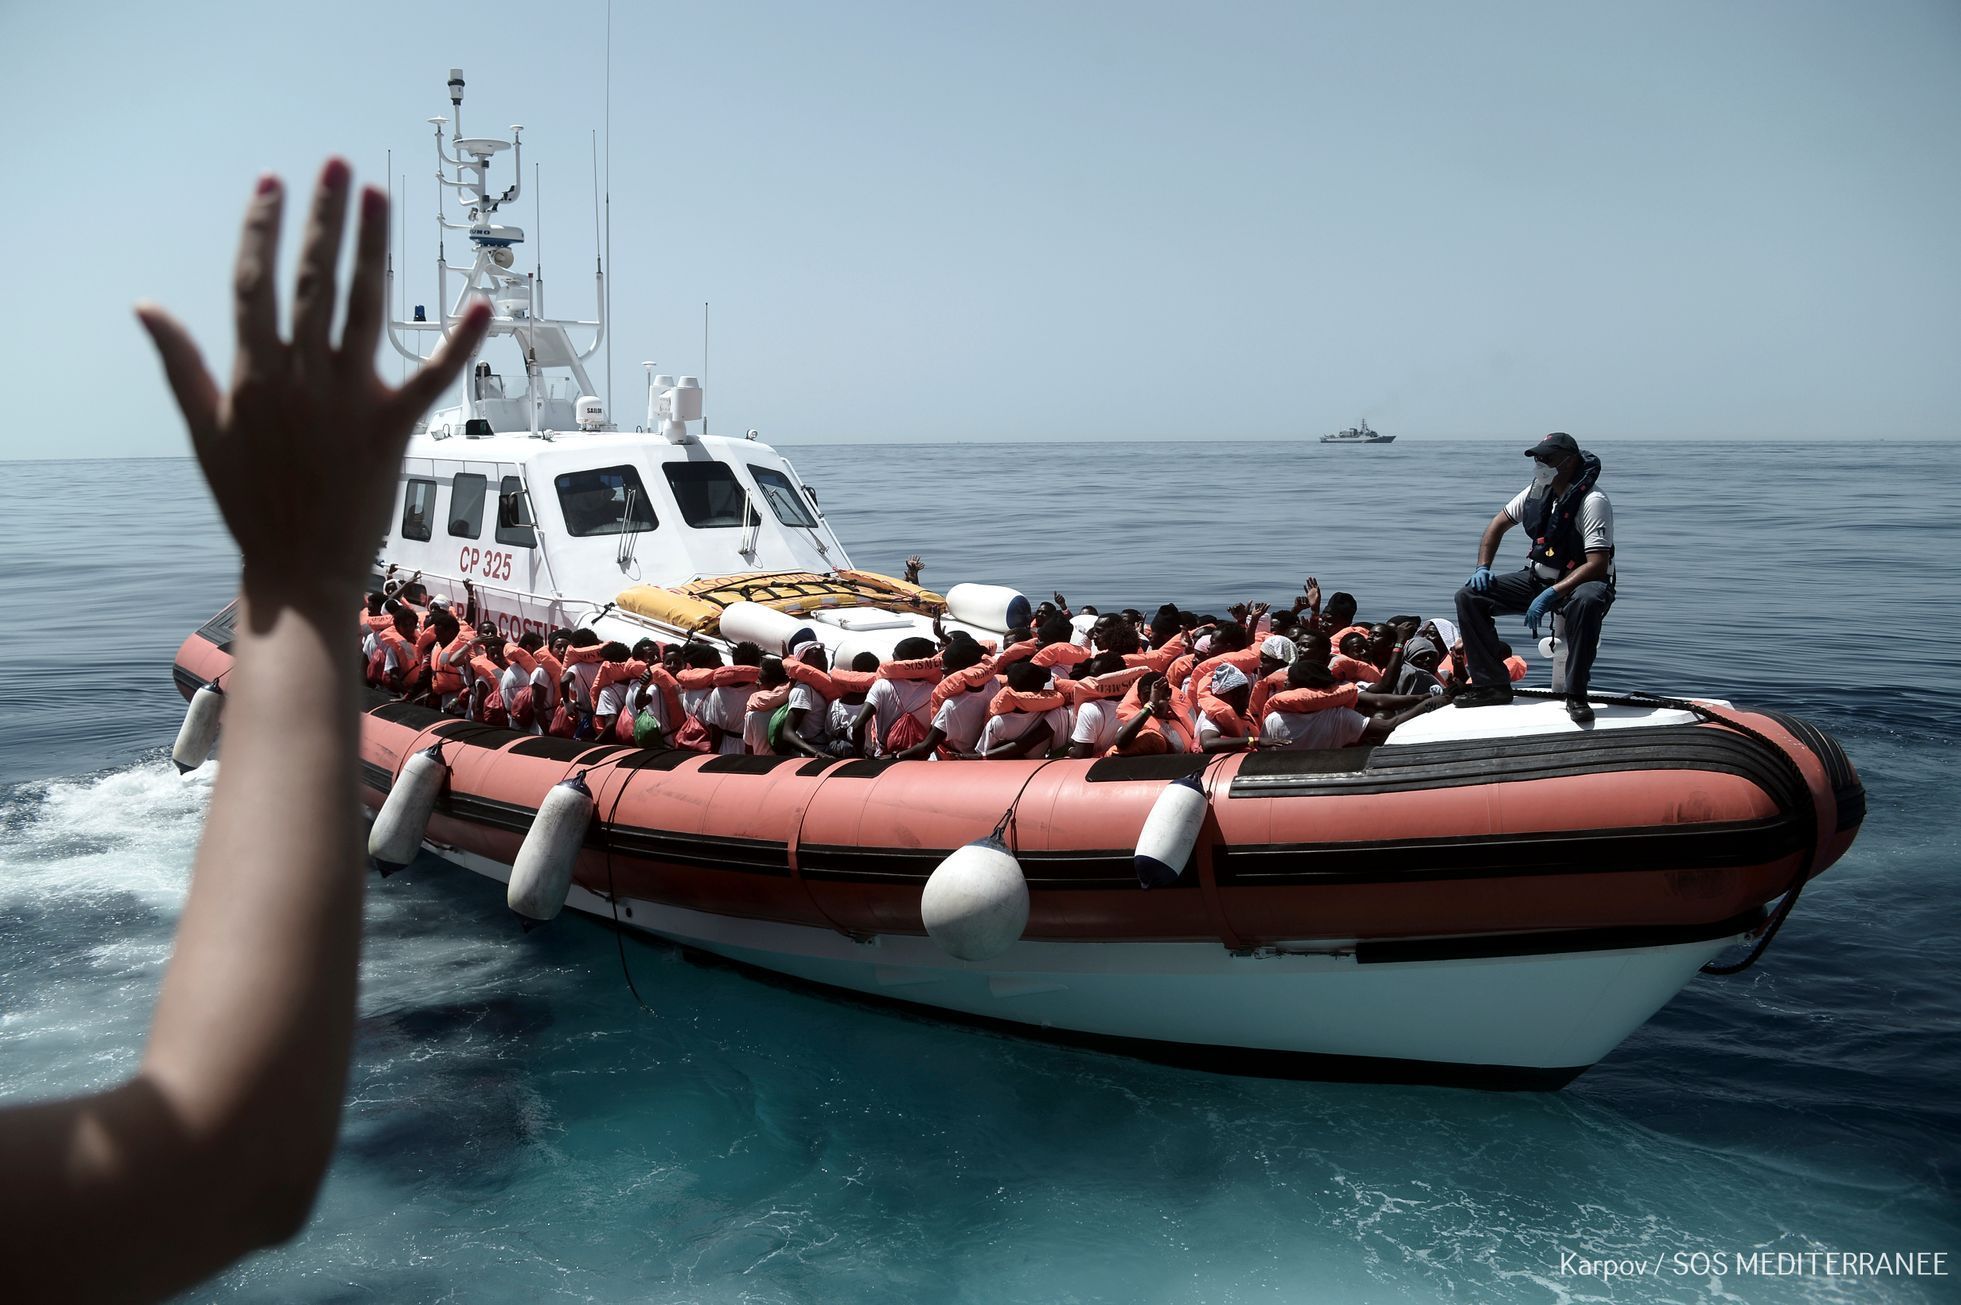 Migranti, které přepravil člun z lodě Aquarius.